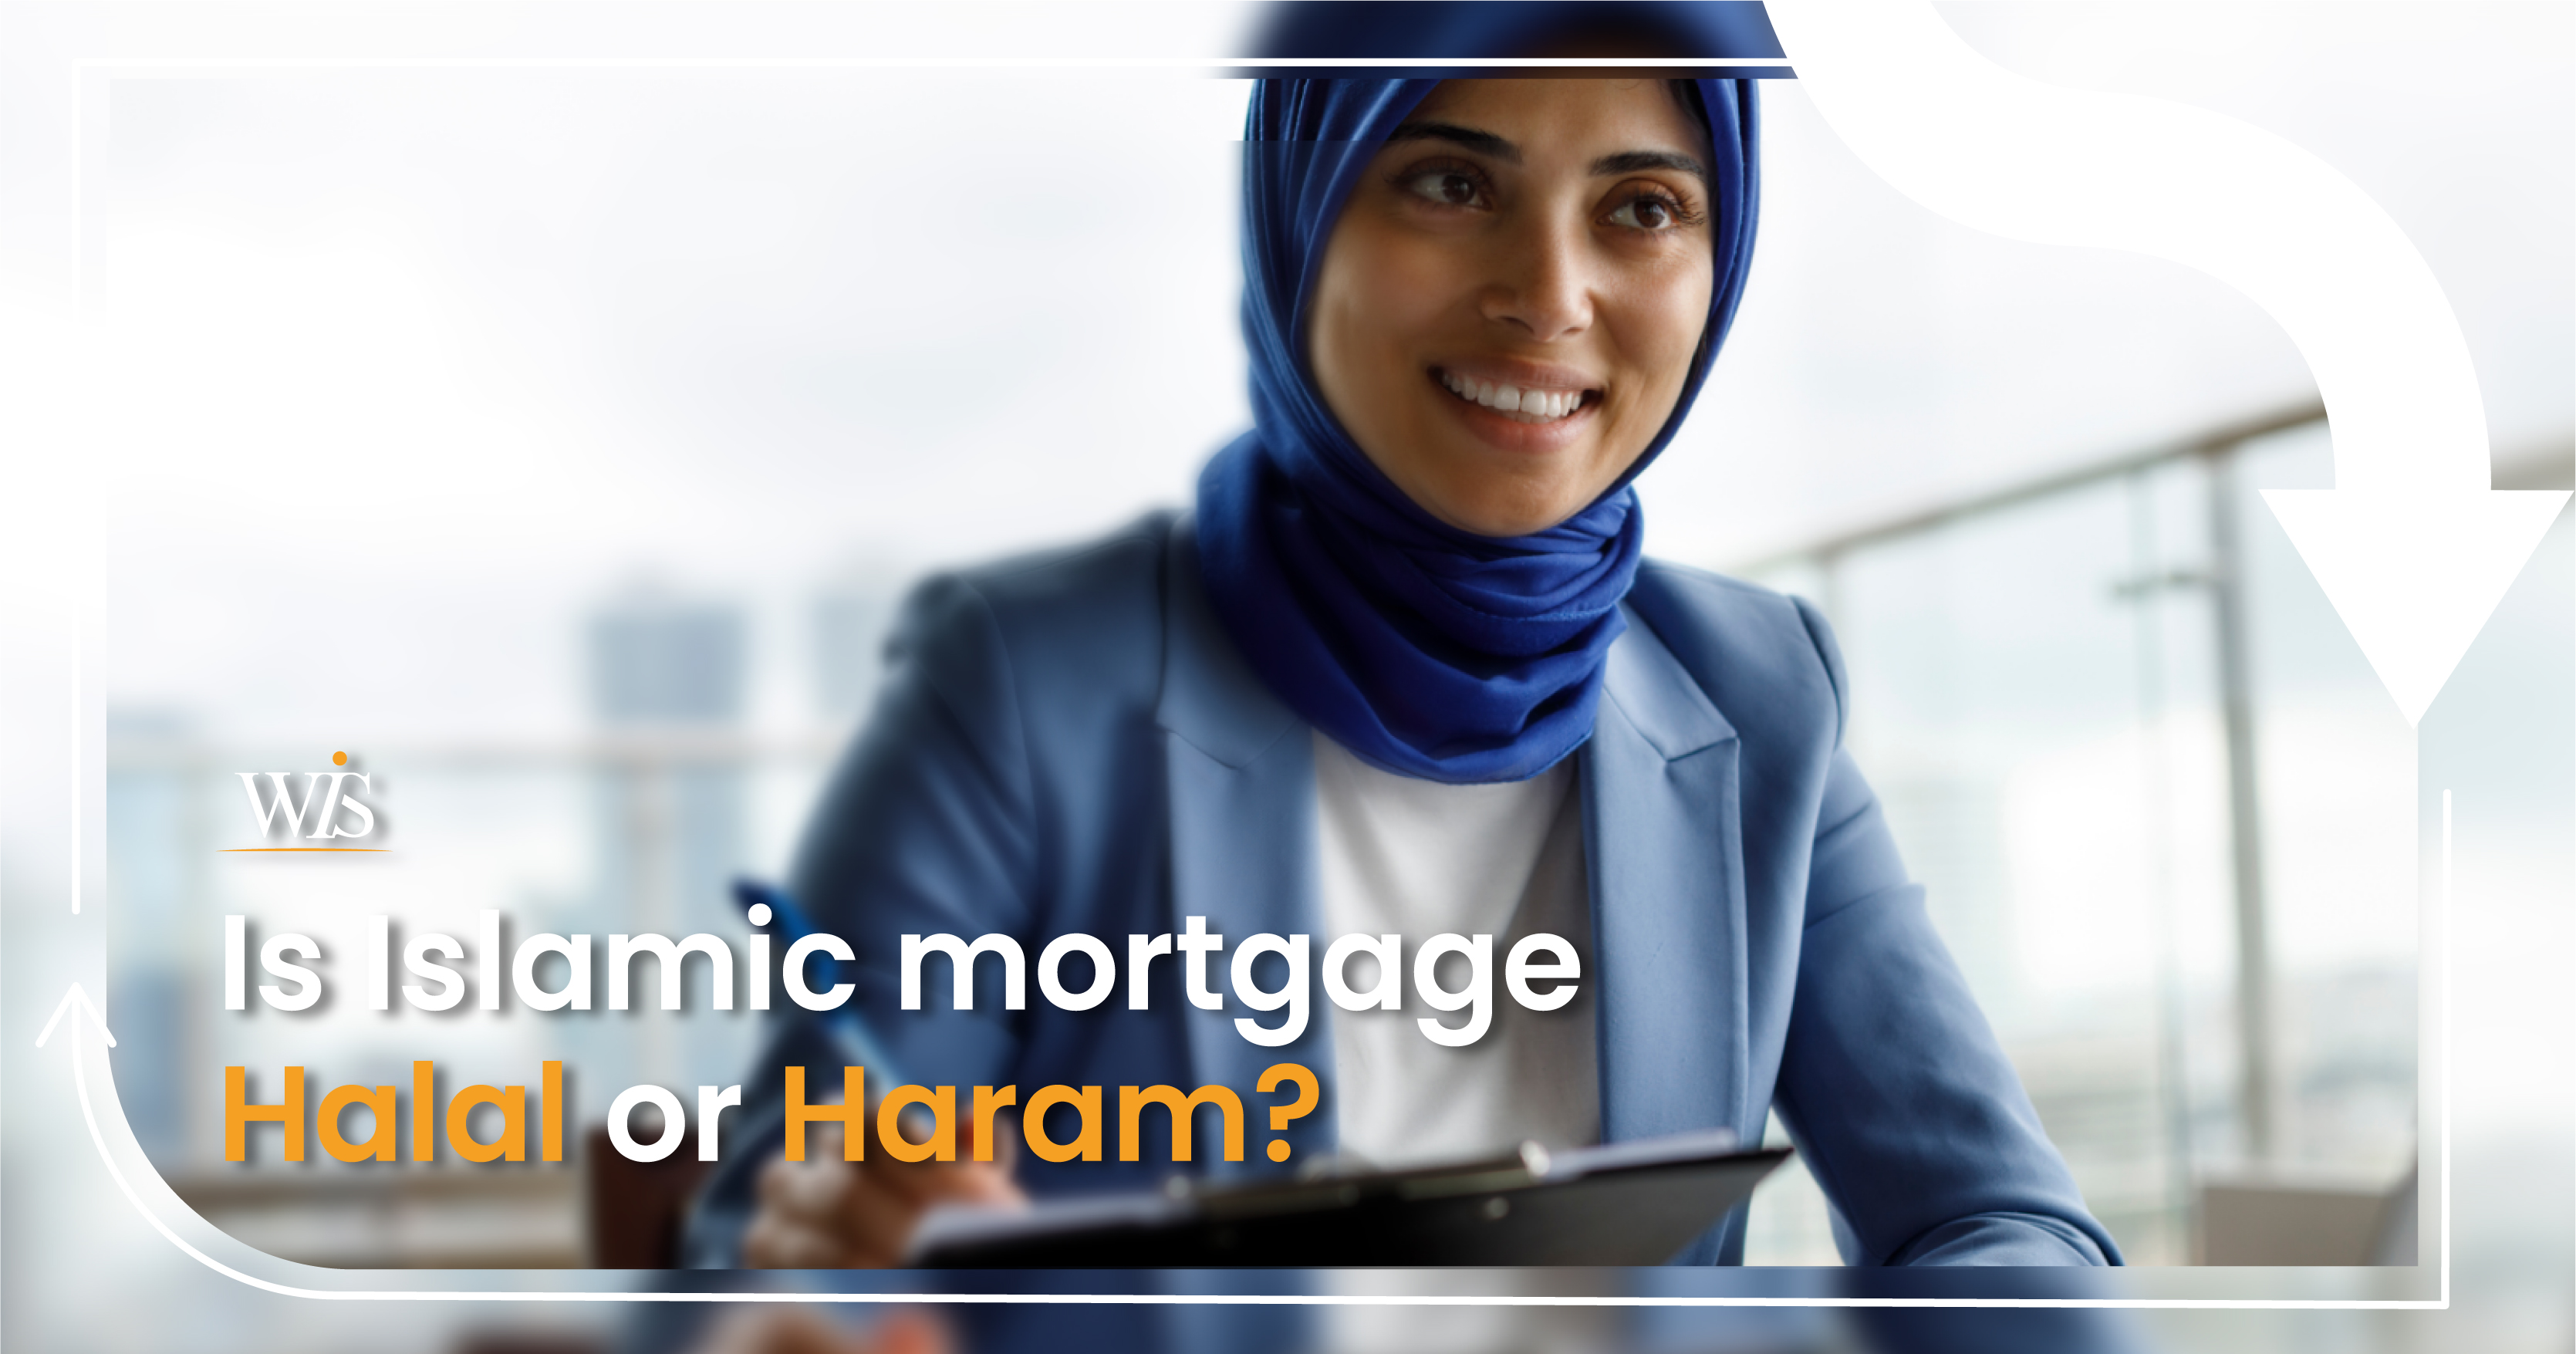 Is an Islamic mortgage halal or haram? image